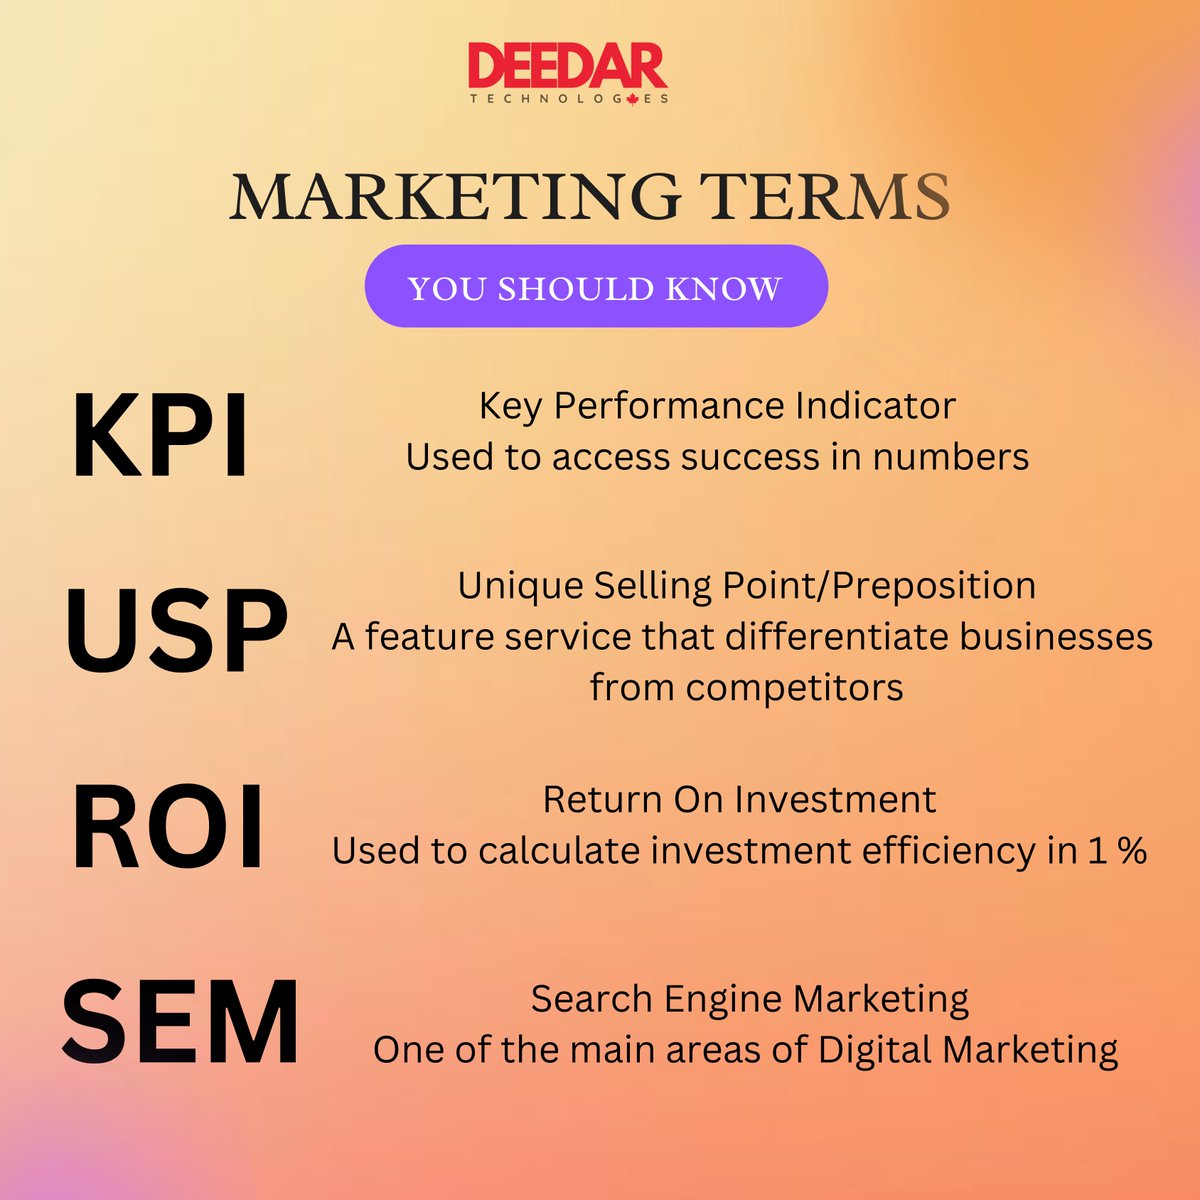 Unlock marketing success with key terms: KPIs (Key Performance Indicators), USPs (Unique Selling Points), ROI (Return on Investment), SEM (Search Engine Marketing). 

#DeedarTechnologies #DigitalMarketing #DigialMarketingStrategies #DigialMarketingTips #DIGIGROWTH #ONLINEPRESENCE